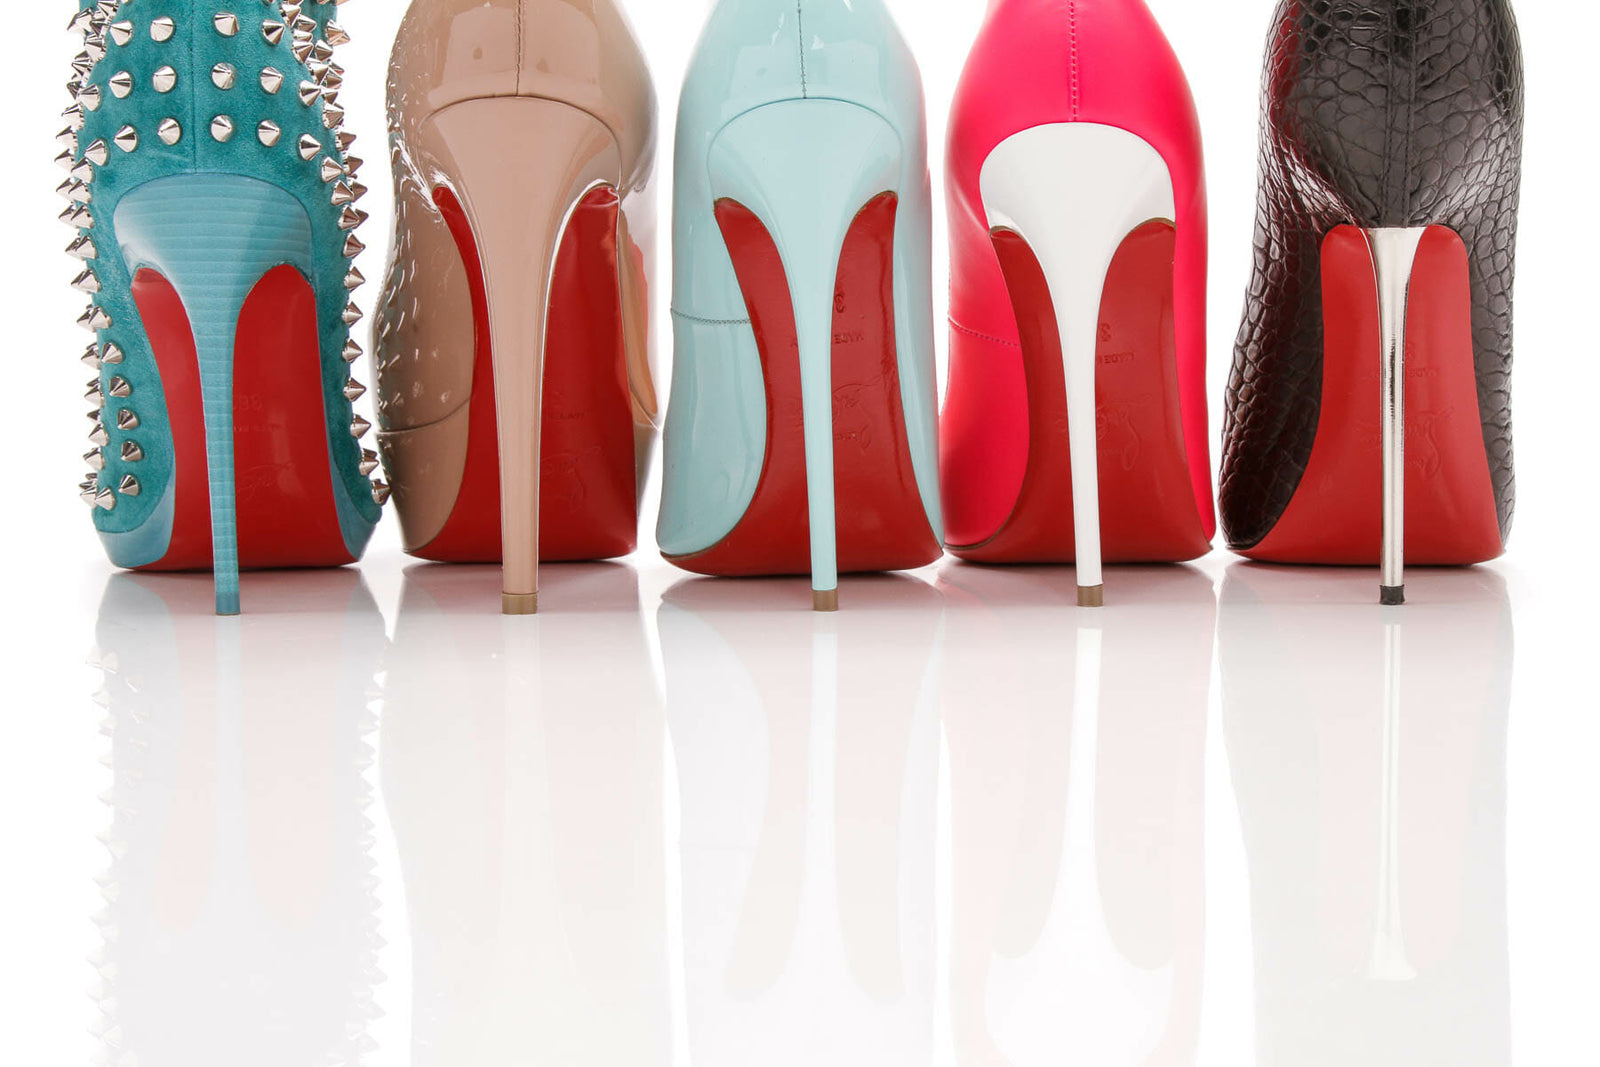 women's louis vuitton red bottom shoes